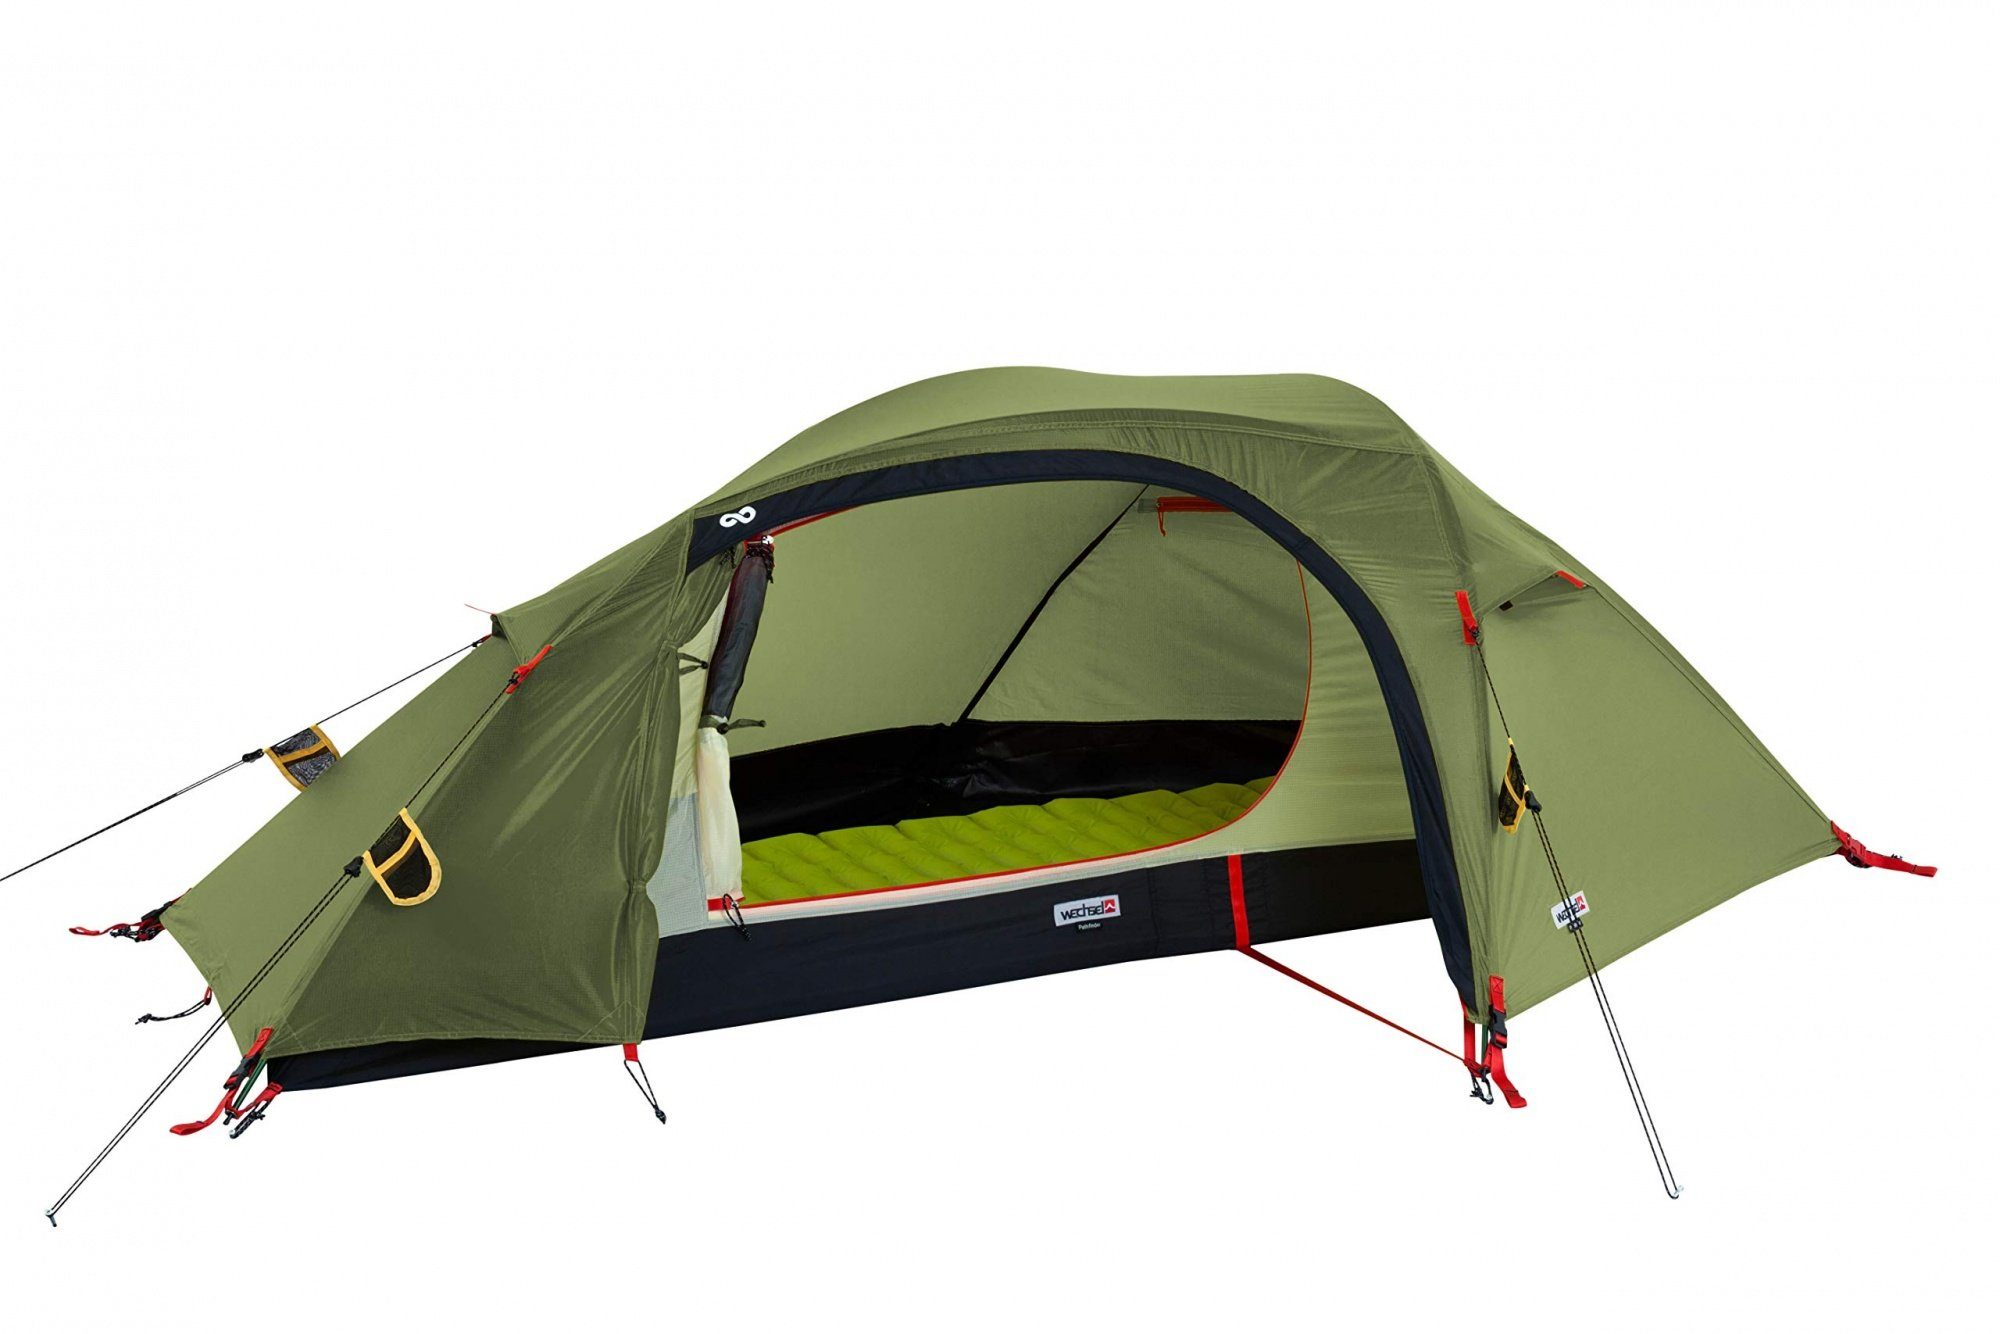 - 1 - 1-Personen Tents Wechsel Pathfinder Line Unlimited Zelt, Kuppelzelt Geodät Personen: